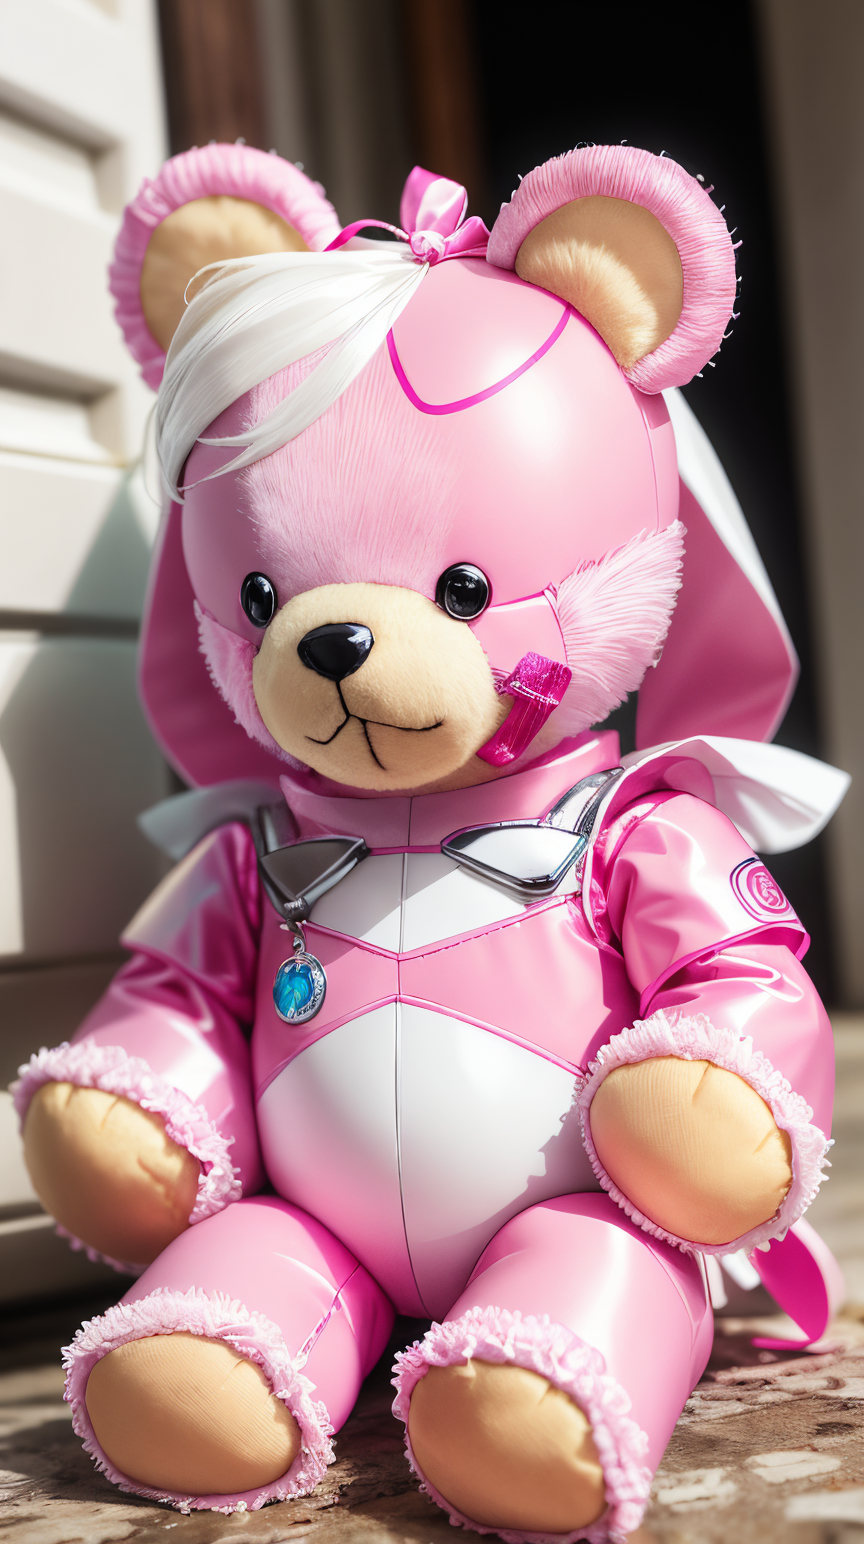 <lora:BarbieCore:0.8> BarbieCore teddybear, (shiny plastic:0.8), (pink and white:0.9), (pastel:0.85)